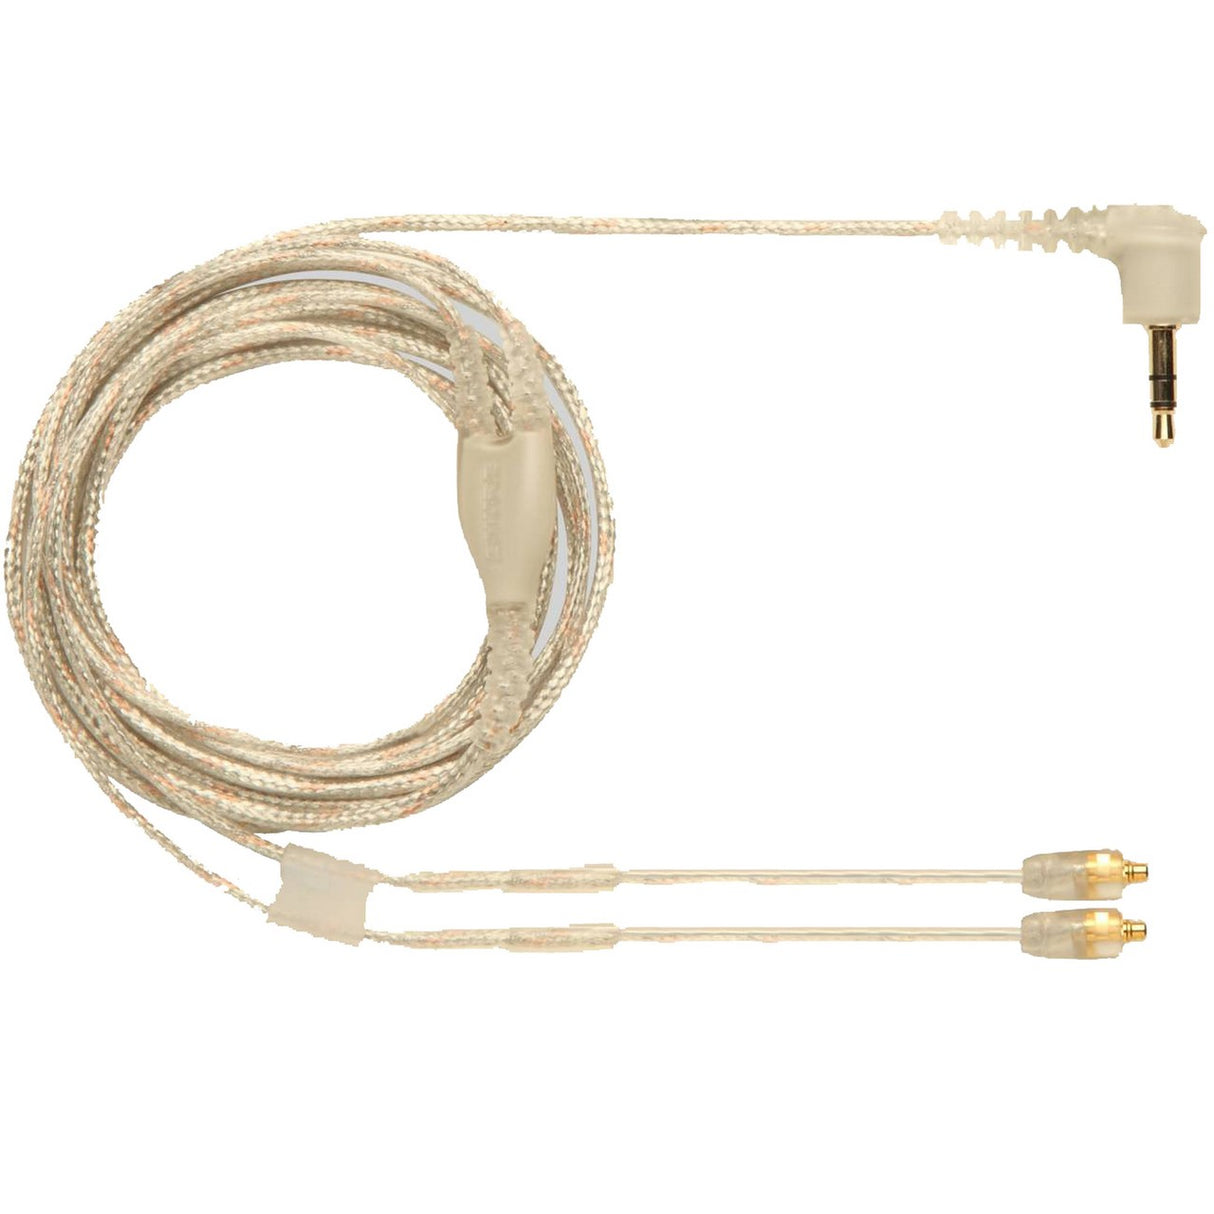 Shure EAC64CL | 64 Inch Detachable Earphone Cable for SE Earphones, Clear